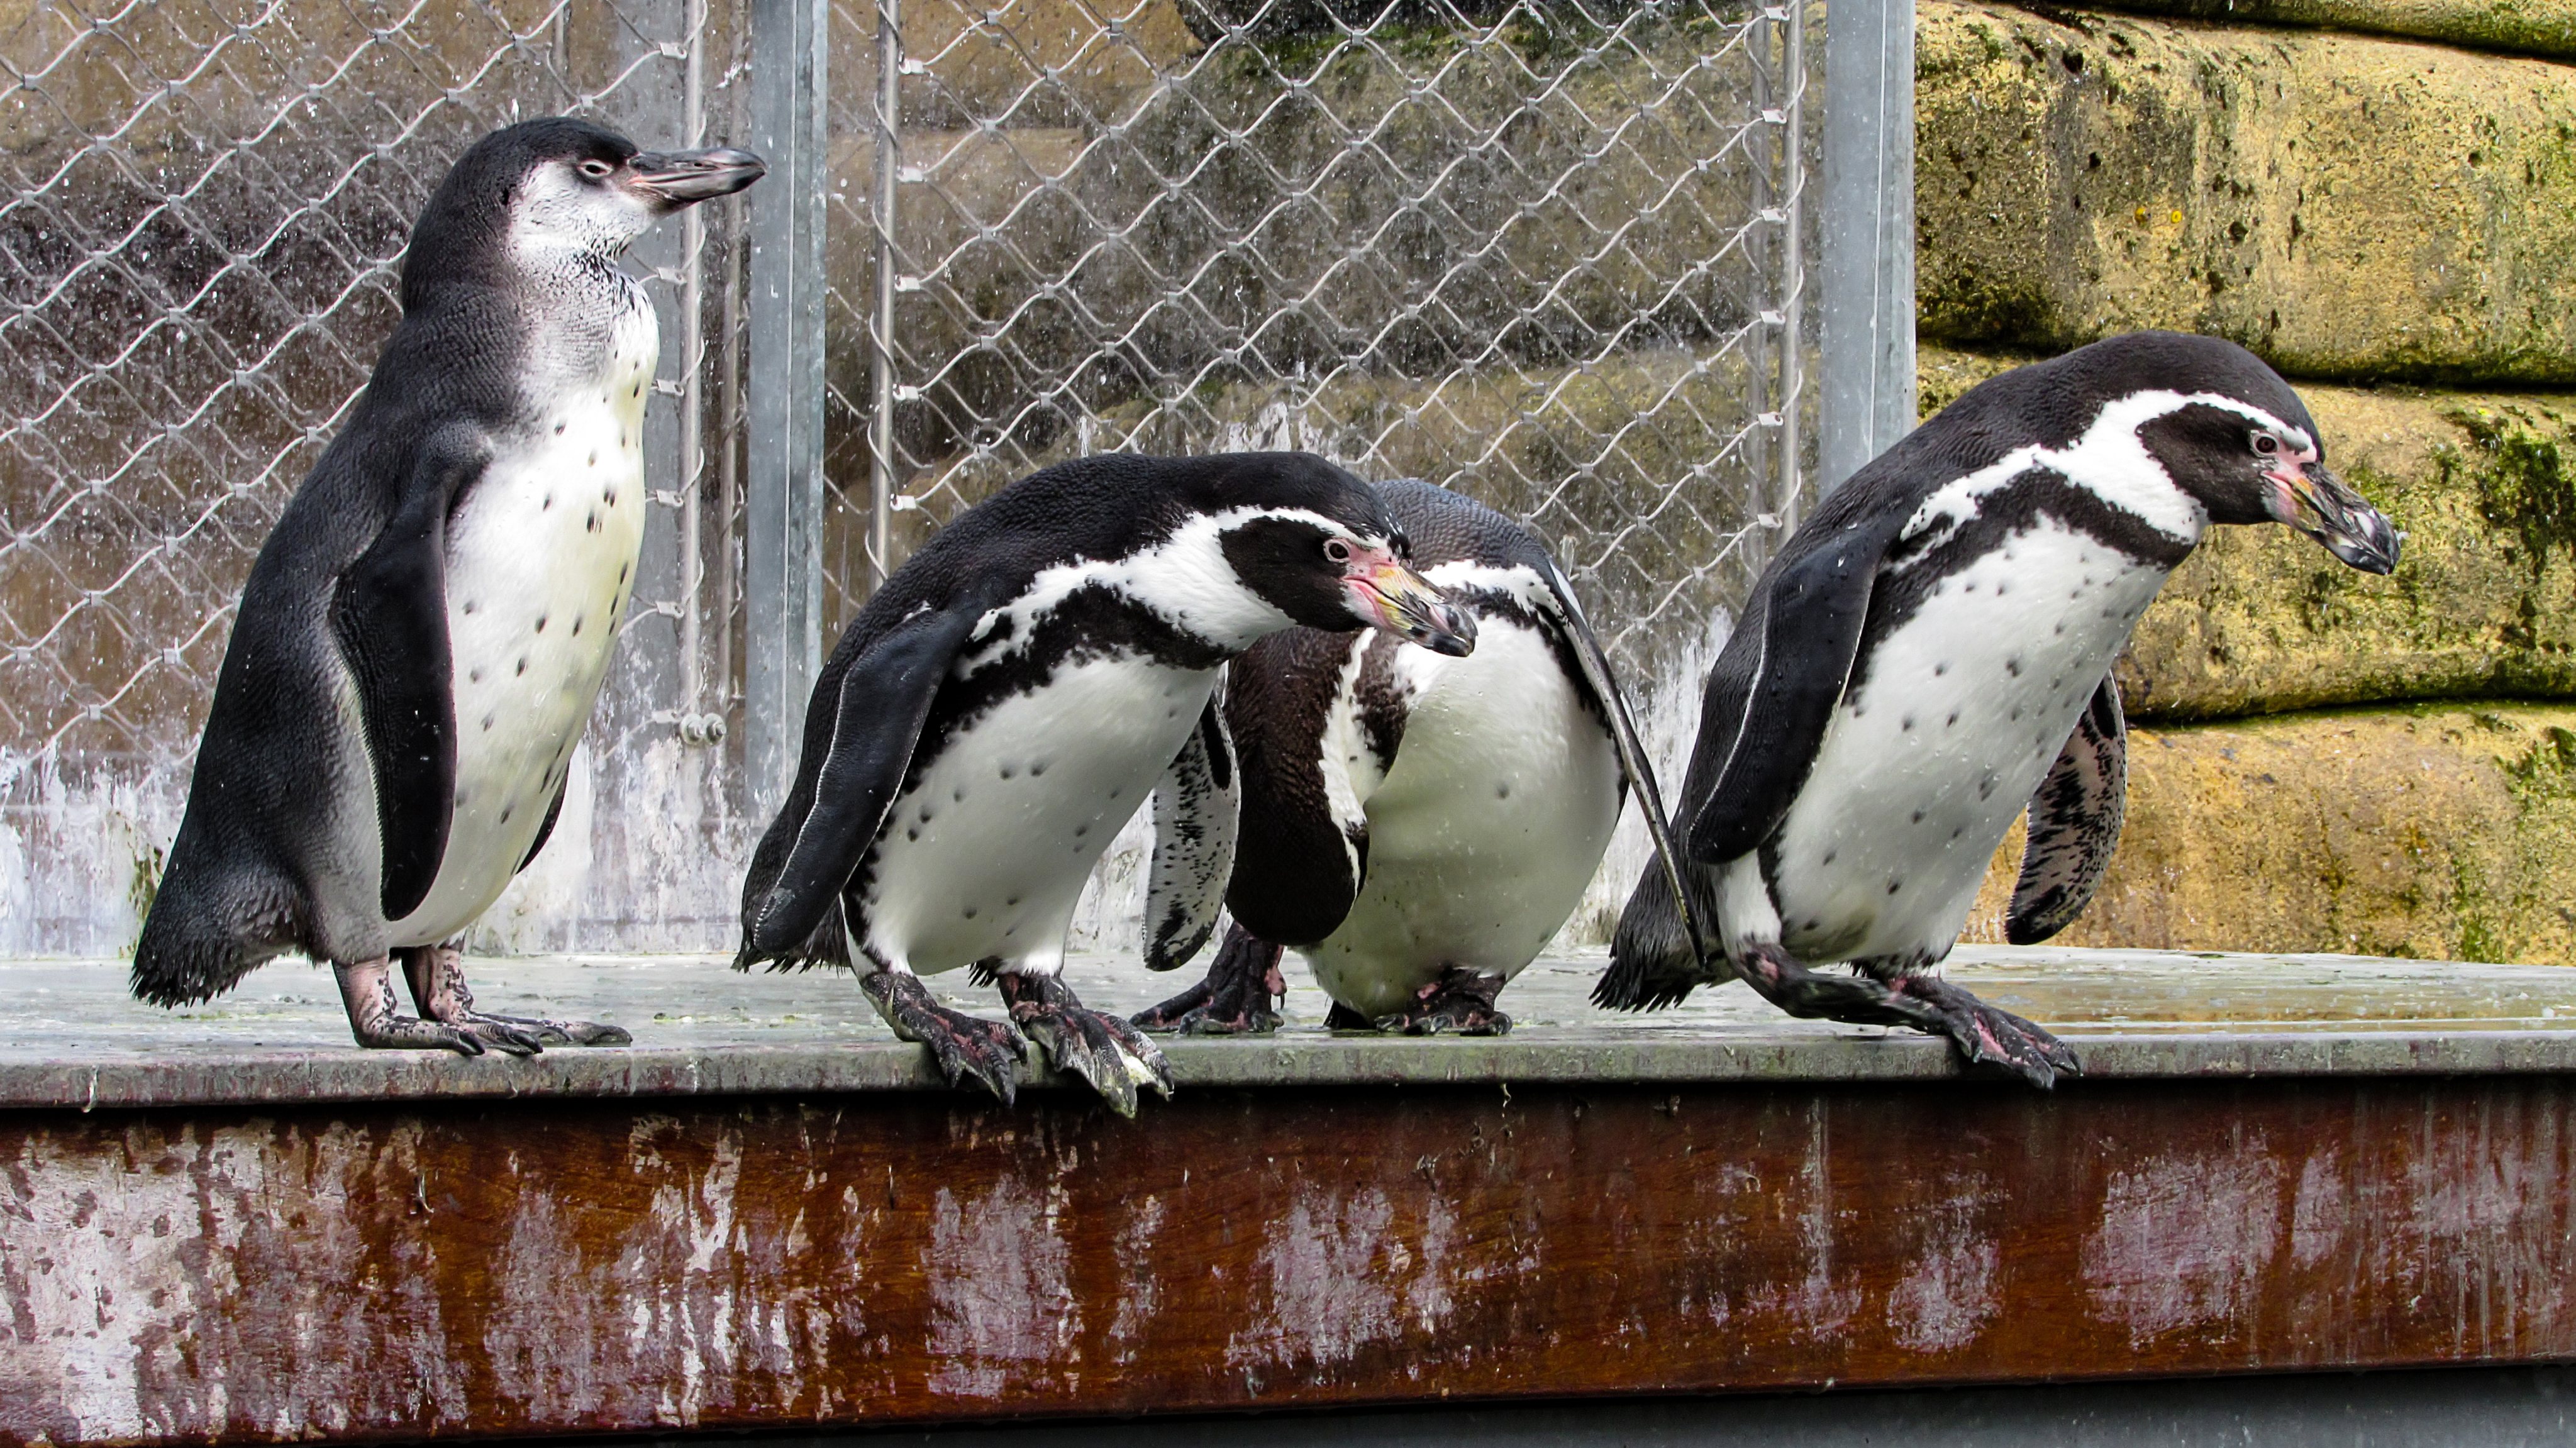 Humboldt Penguins (Spheniscus humboldti) Getting Ready to Jump